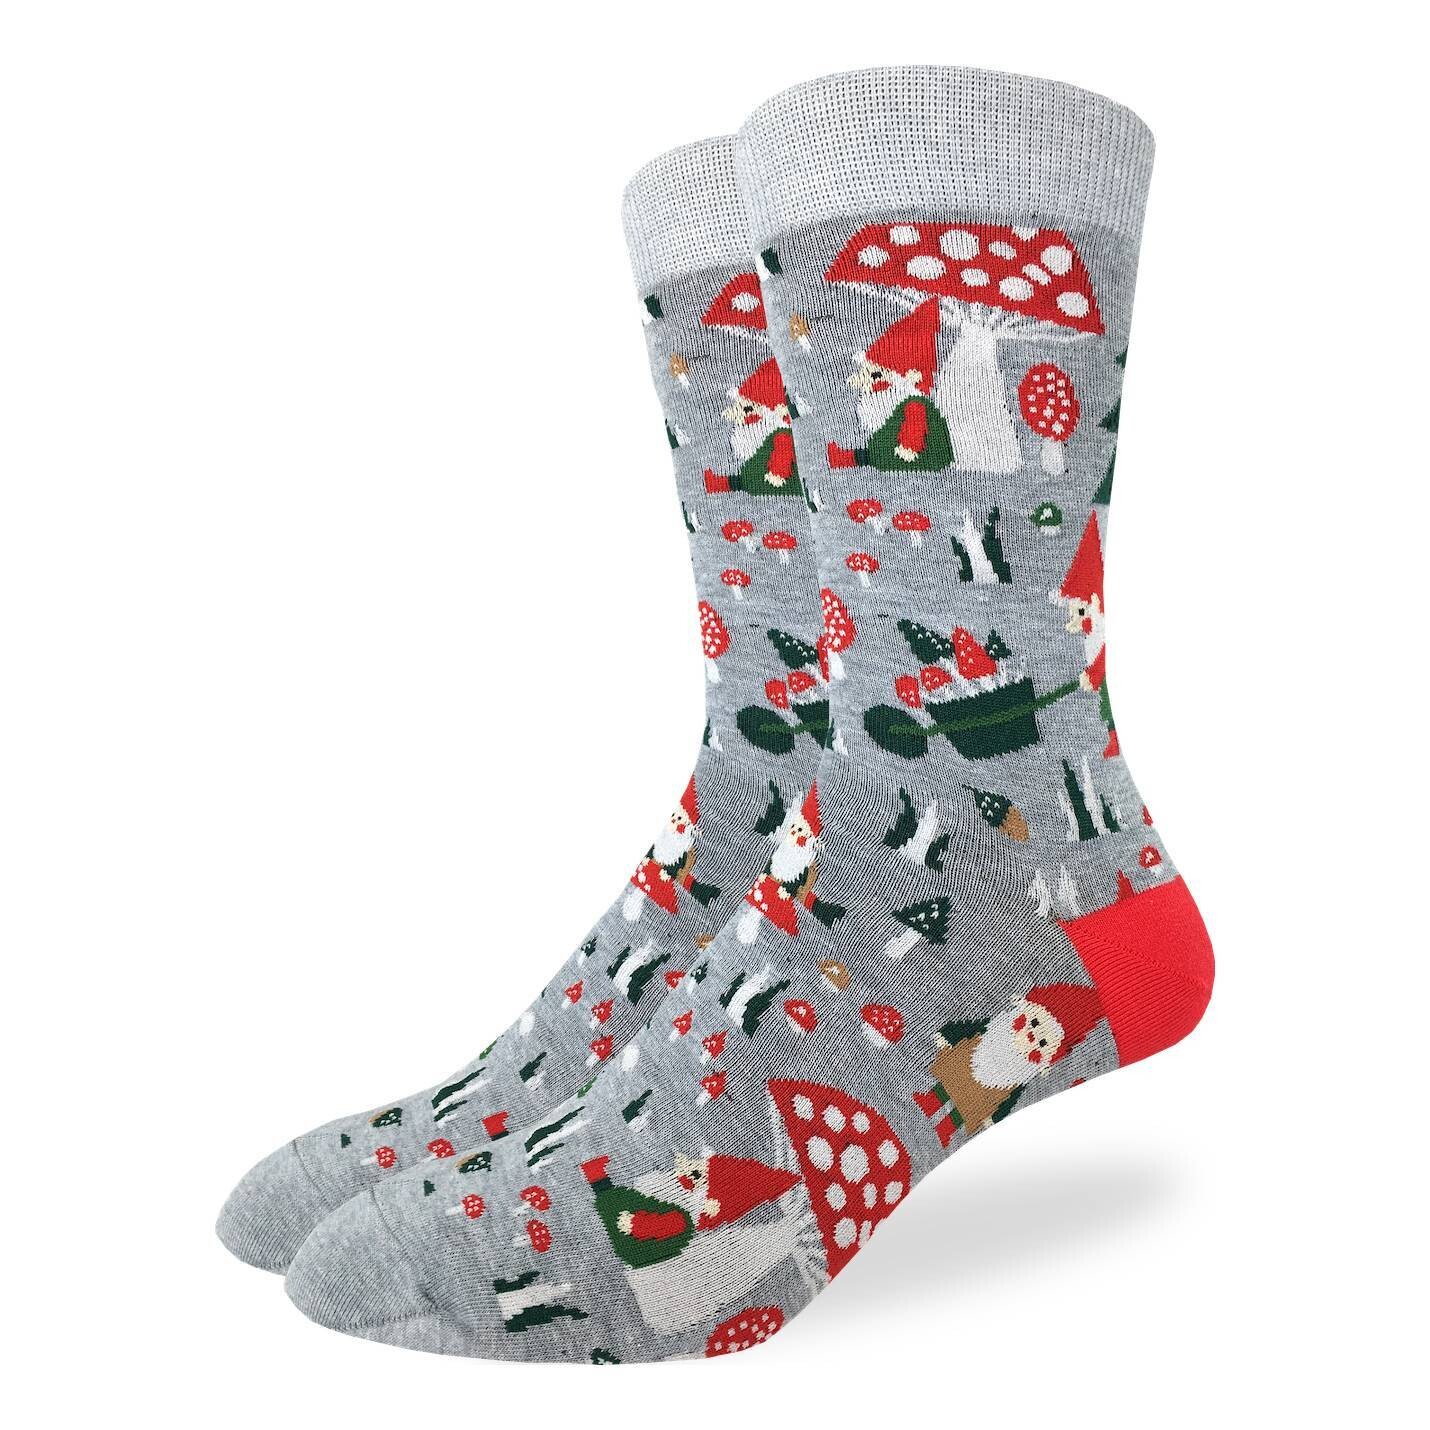 Woodland Gnomes socks | M/L adult sizes | Good Luck Sock